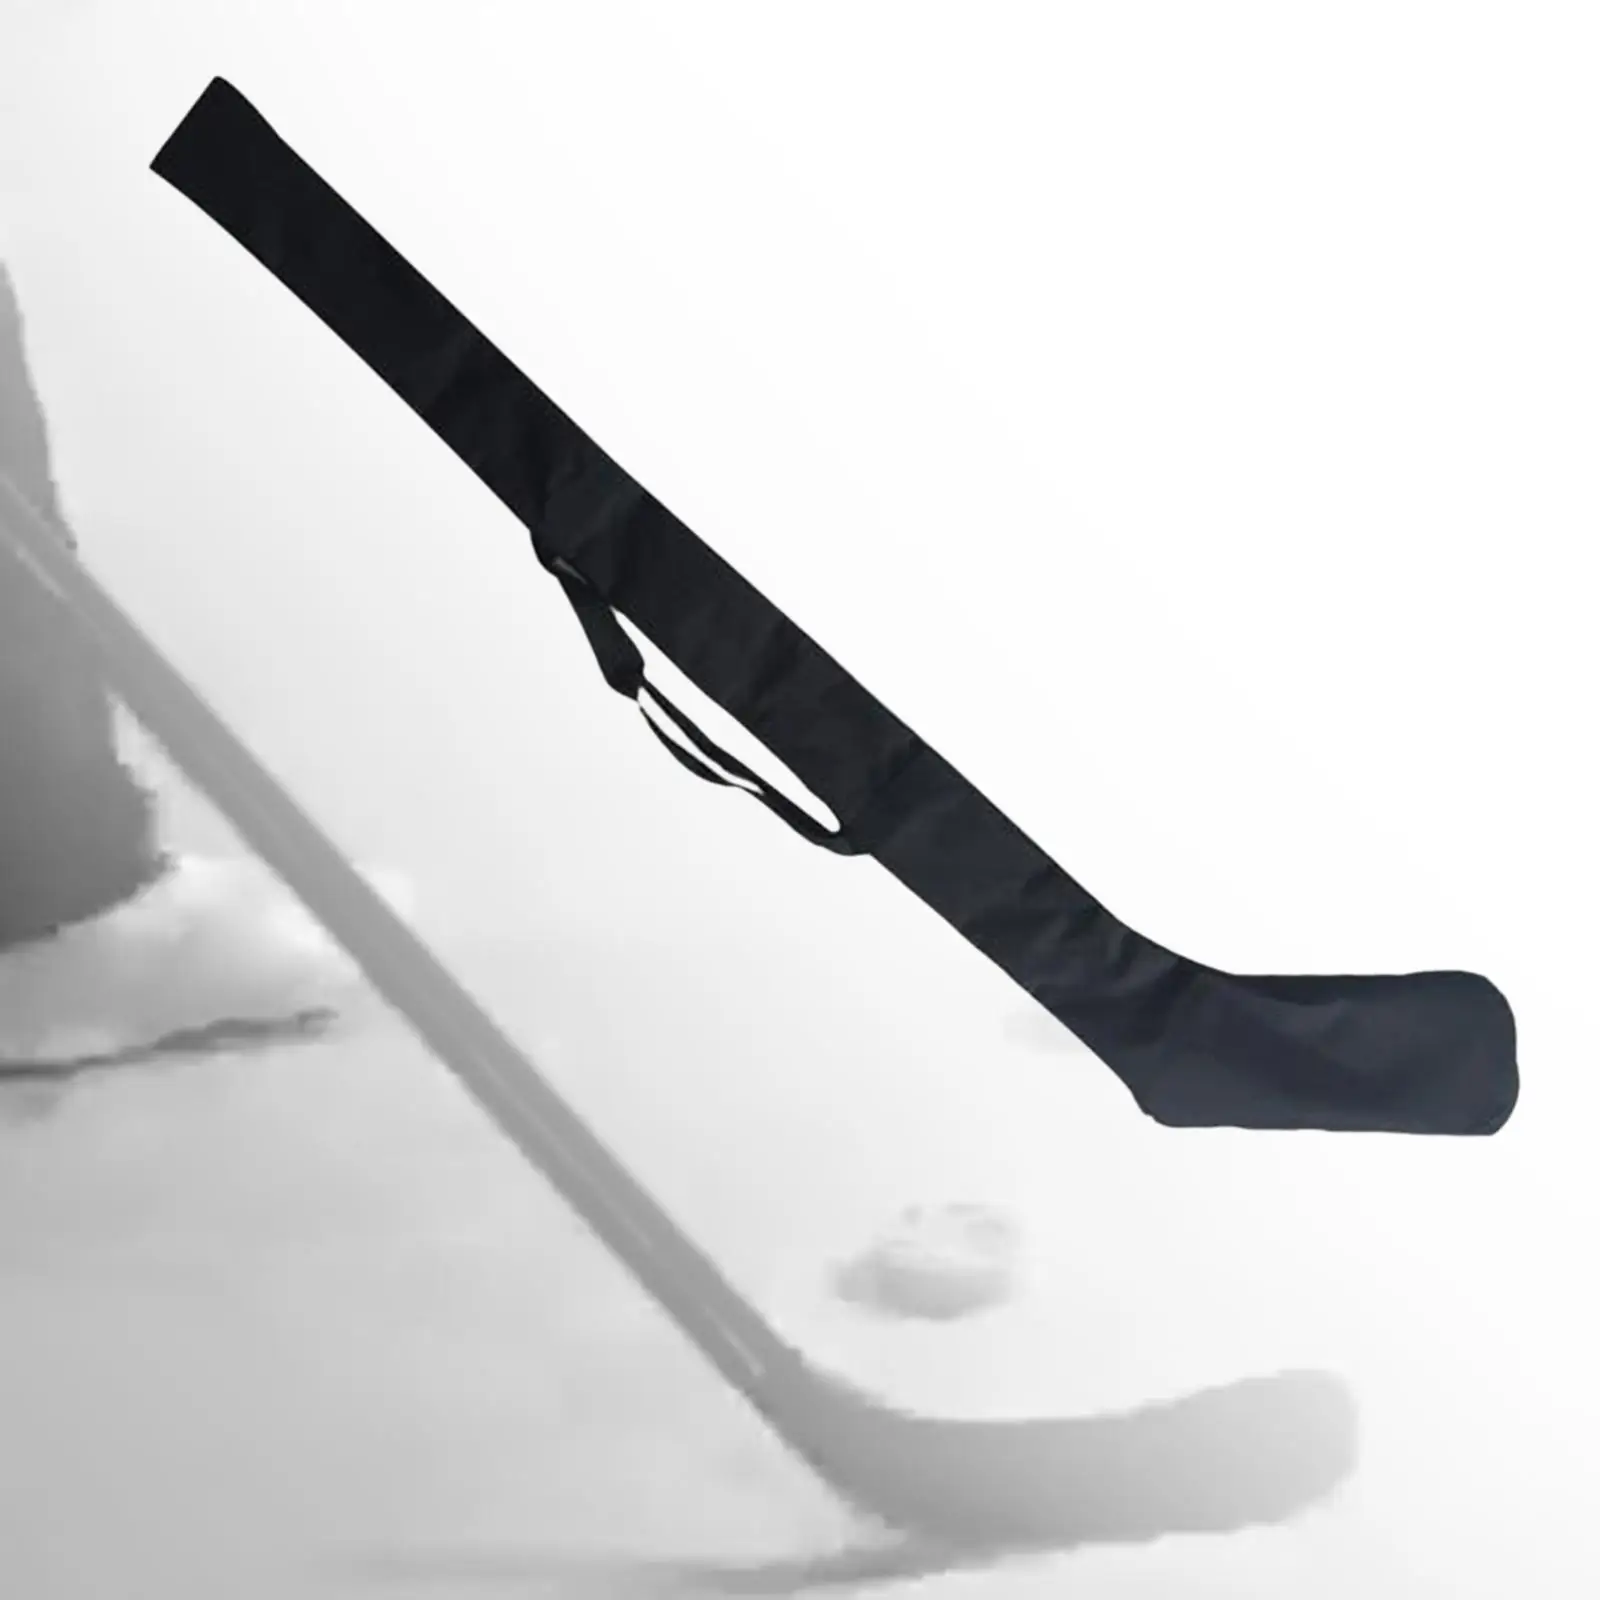 Ice Hockey Sticks Bag Holds up to 6 Portable Shoulder Club Bag Ice Hockey Skate